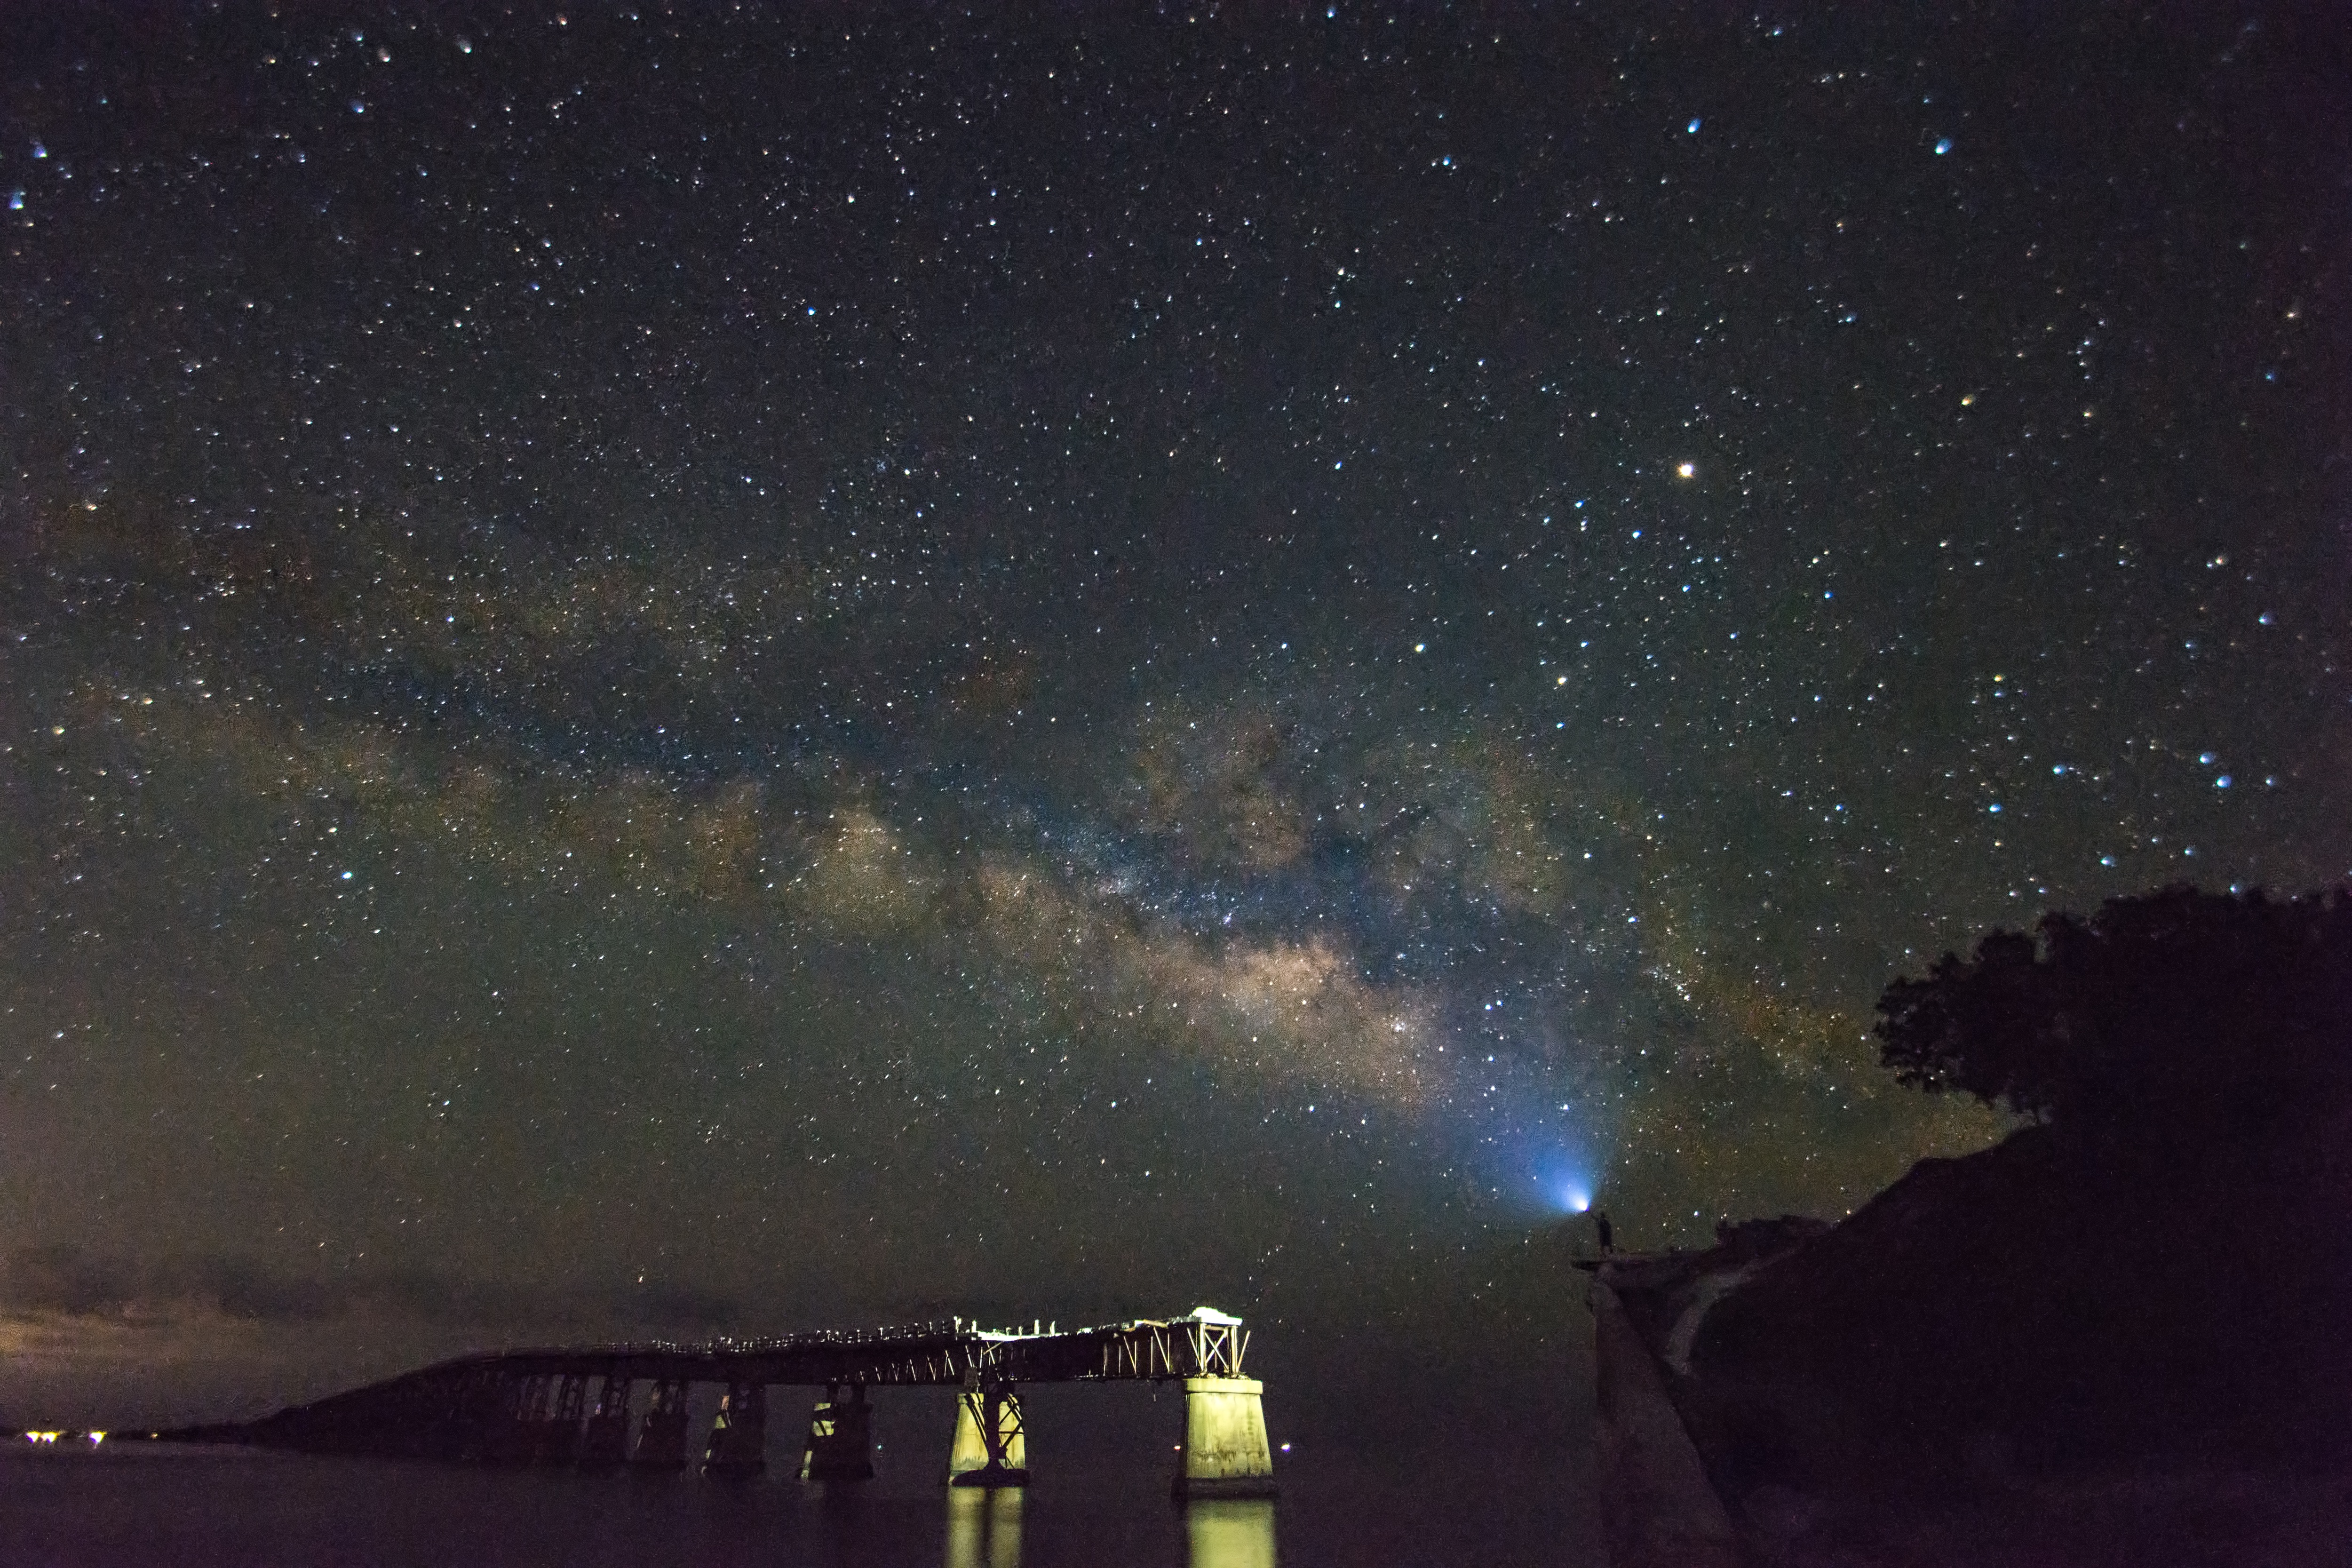 Stargazing at Bahia Honda